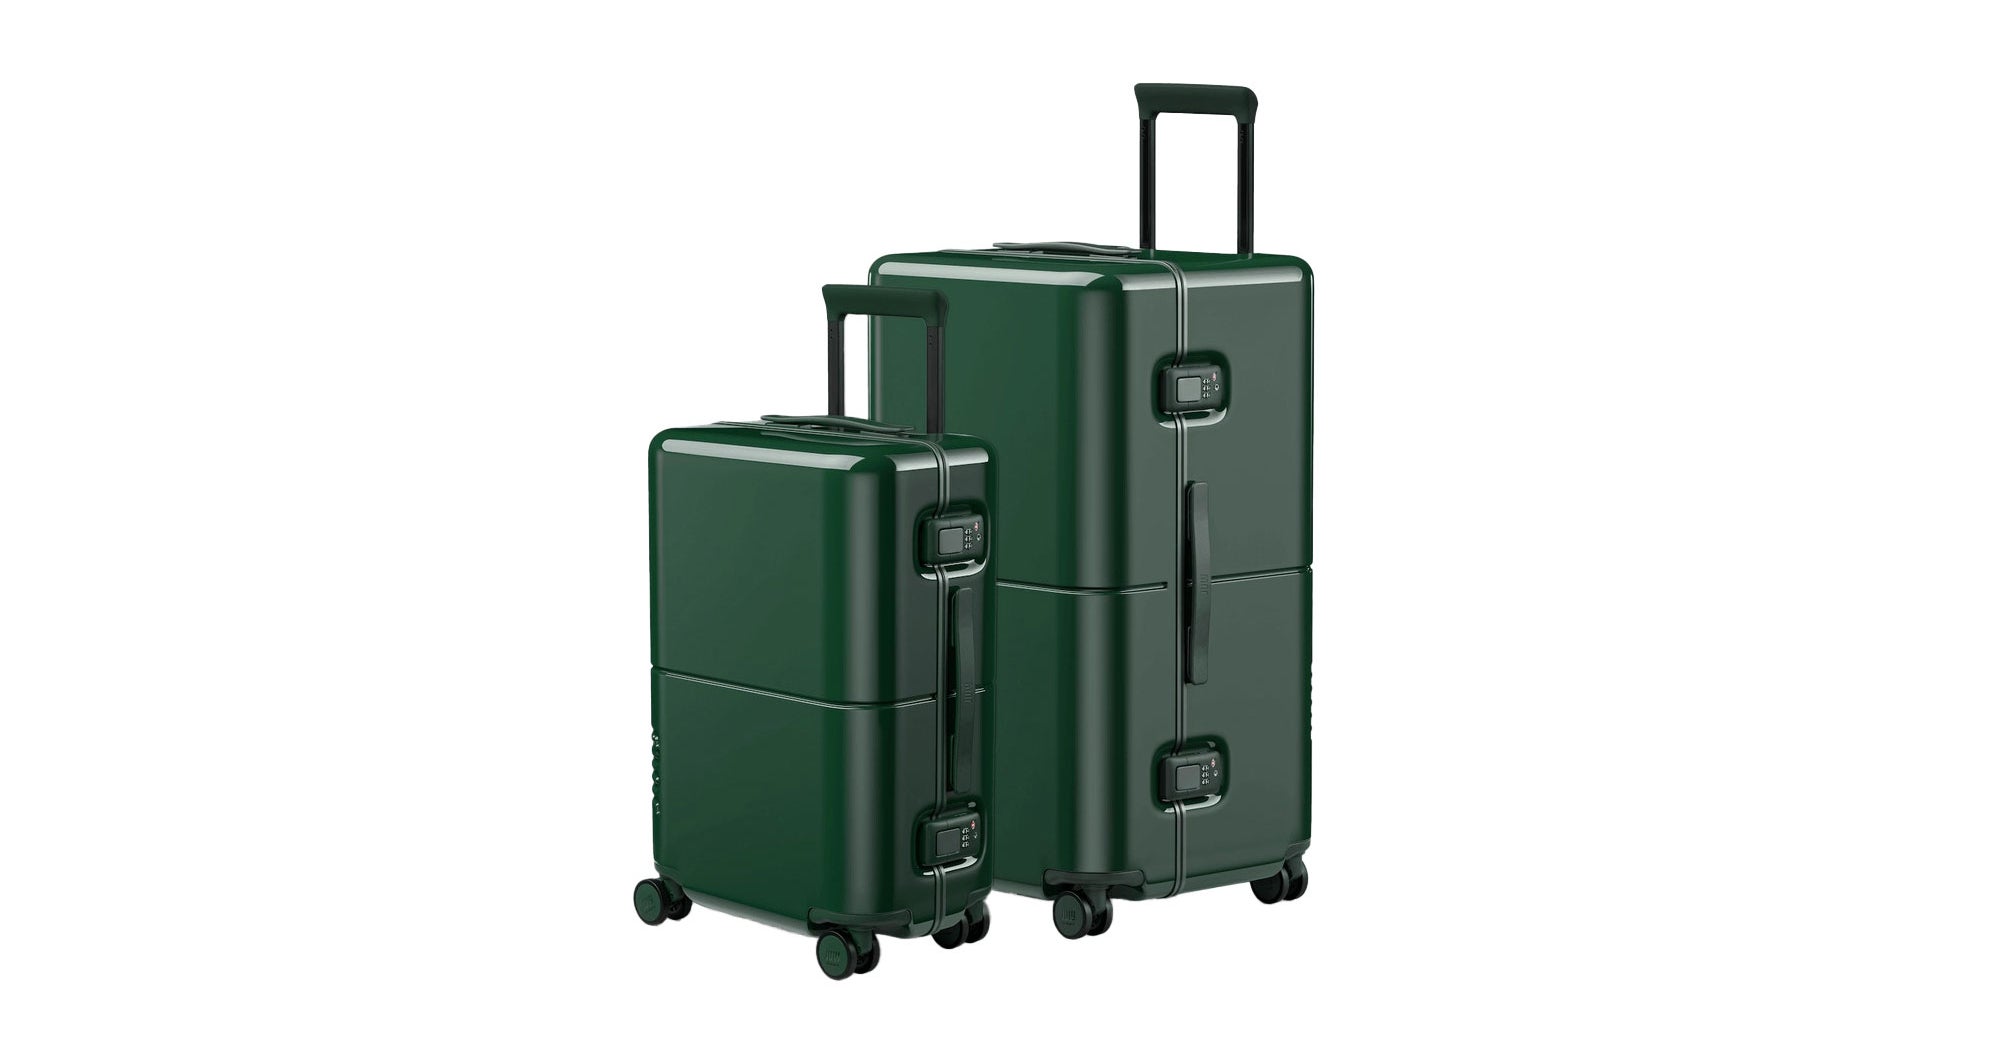 Explore More Luggage Set